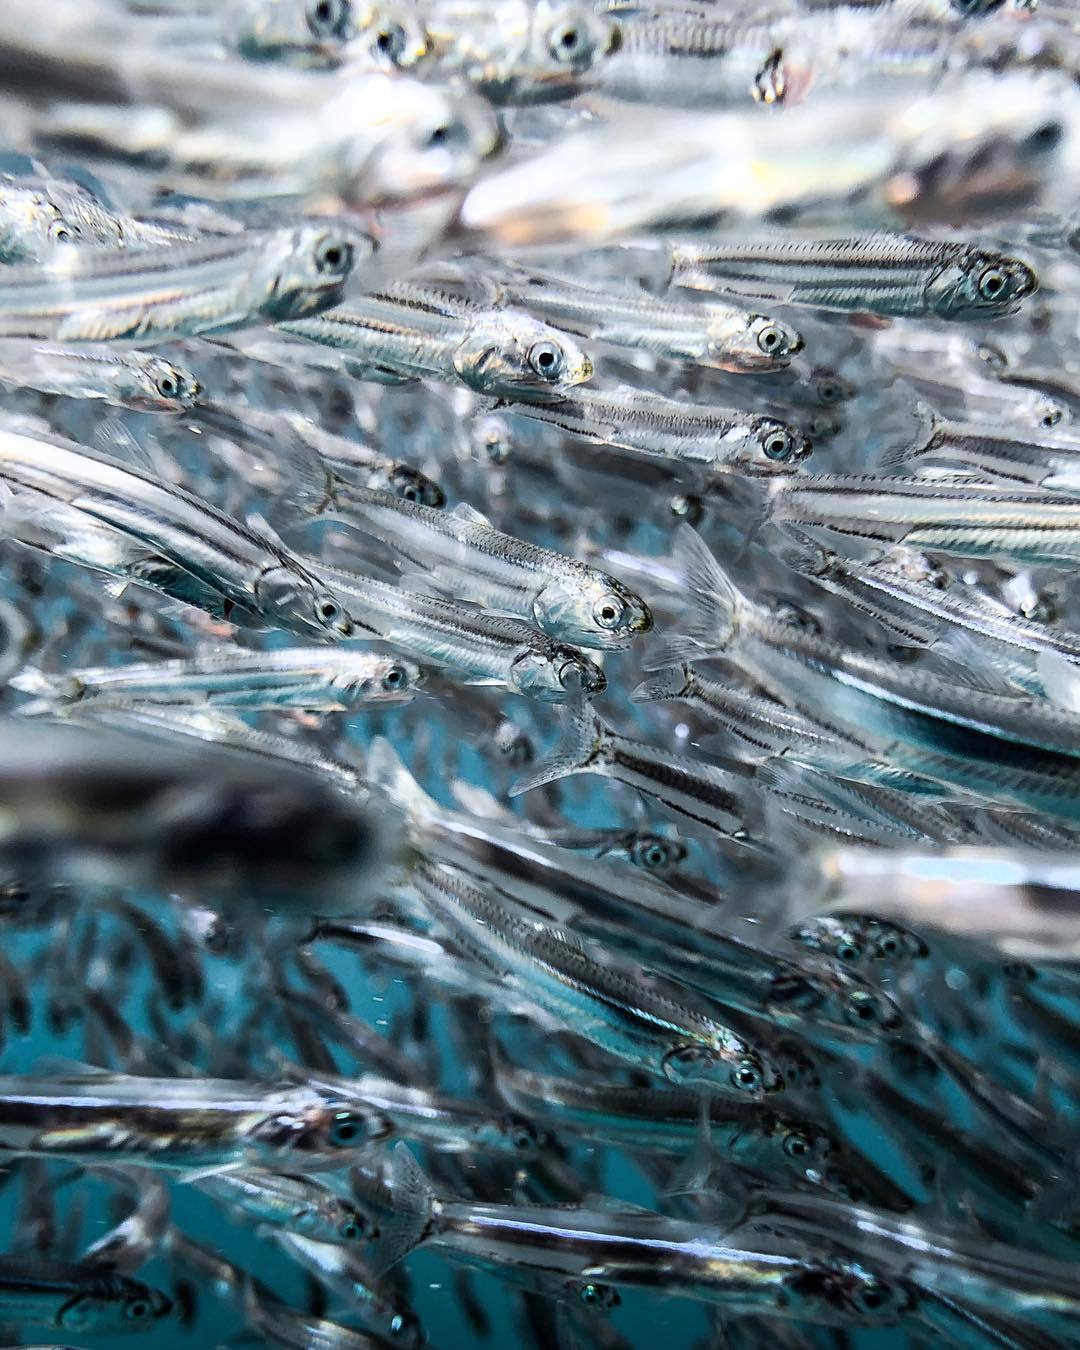  成群的银鱼，来自摄影师Surf & Earth。 